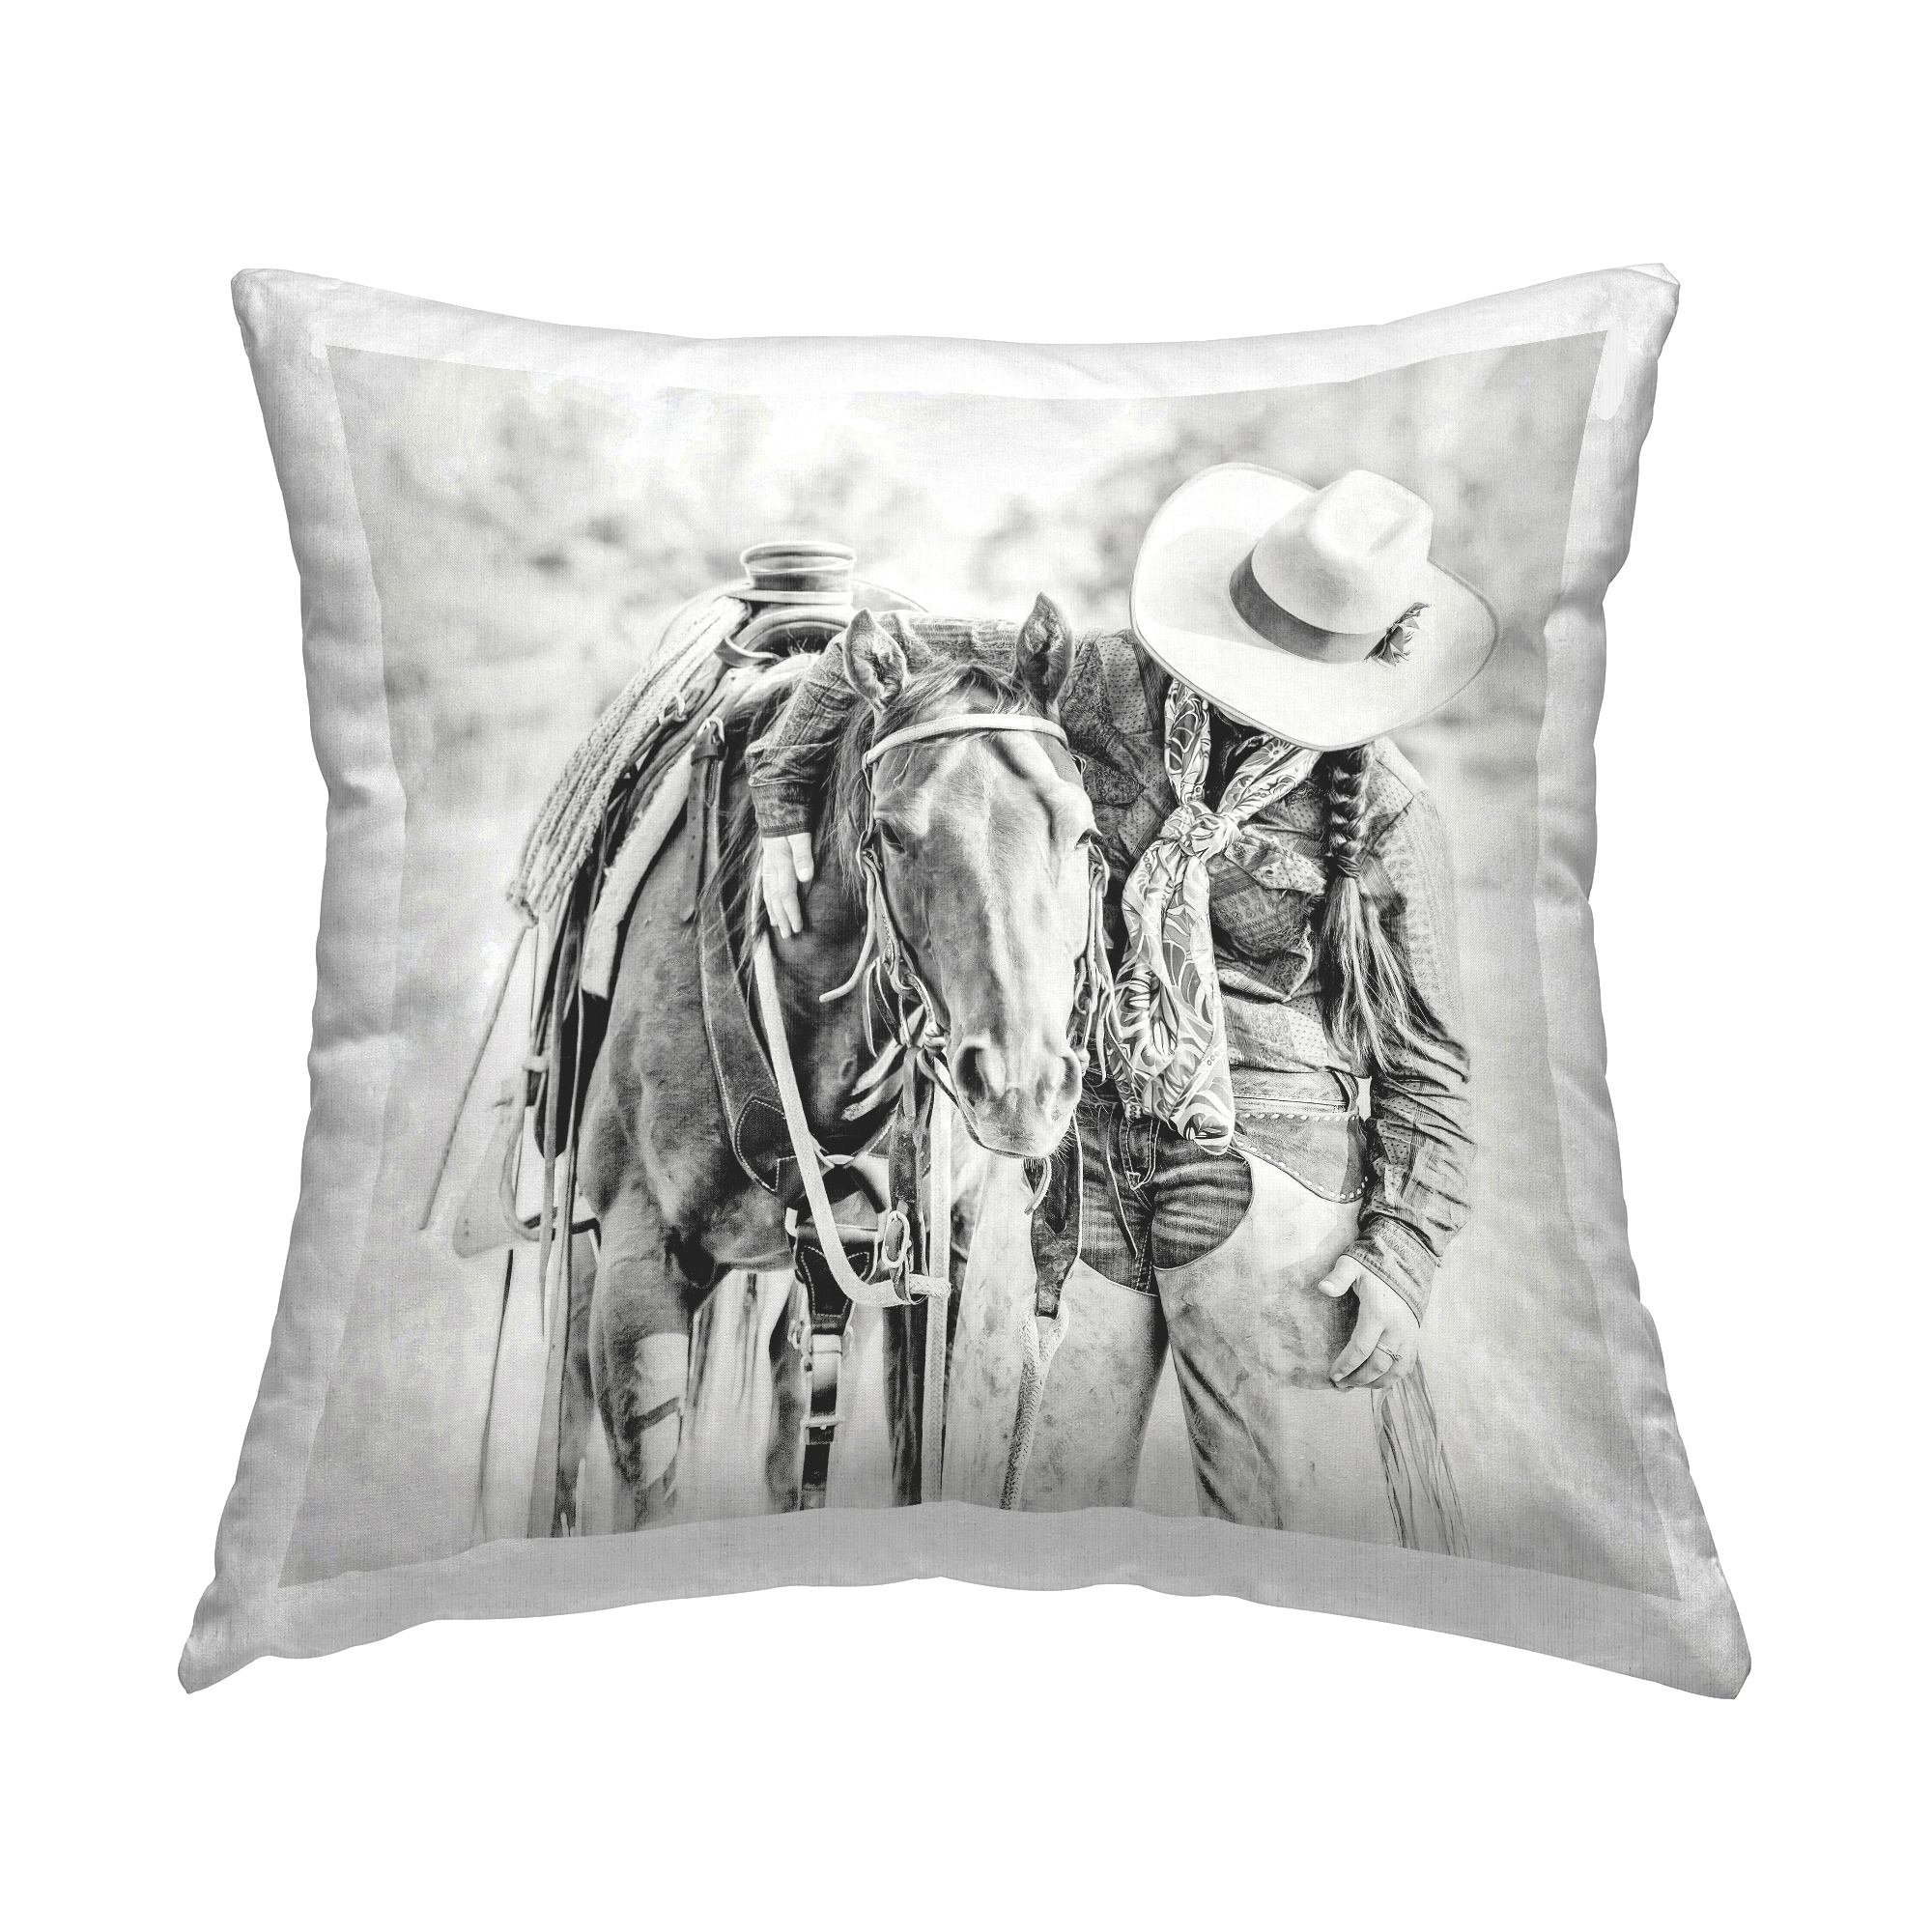 https://ak1.ostkcdn.com/images/products/is/images/direct/637697de7704d0c78d62101757fea82497620e54/Stupell-Industries-Cowboy-%26-Horse-Portrait-Printed-Throw-Pillow-Design-by-PBurchettePhoto.jpg